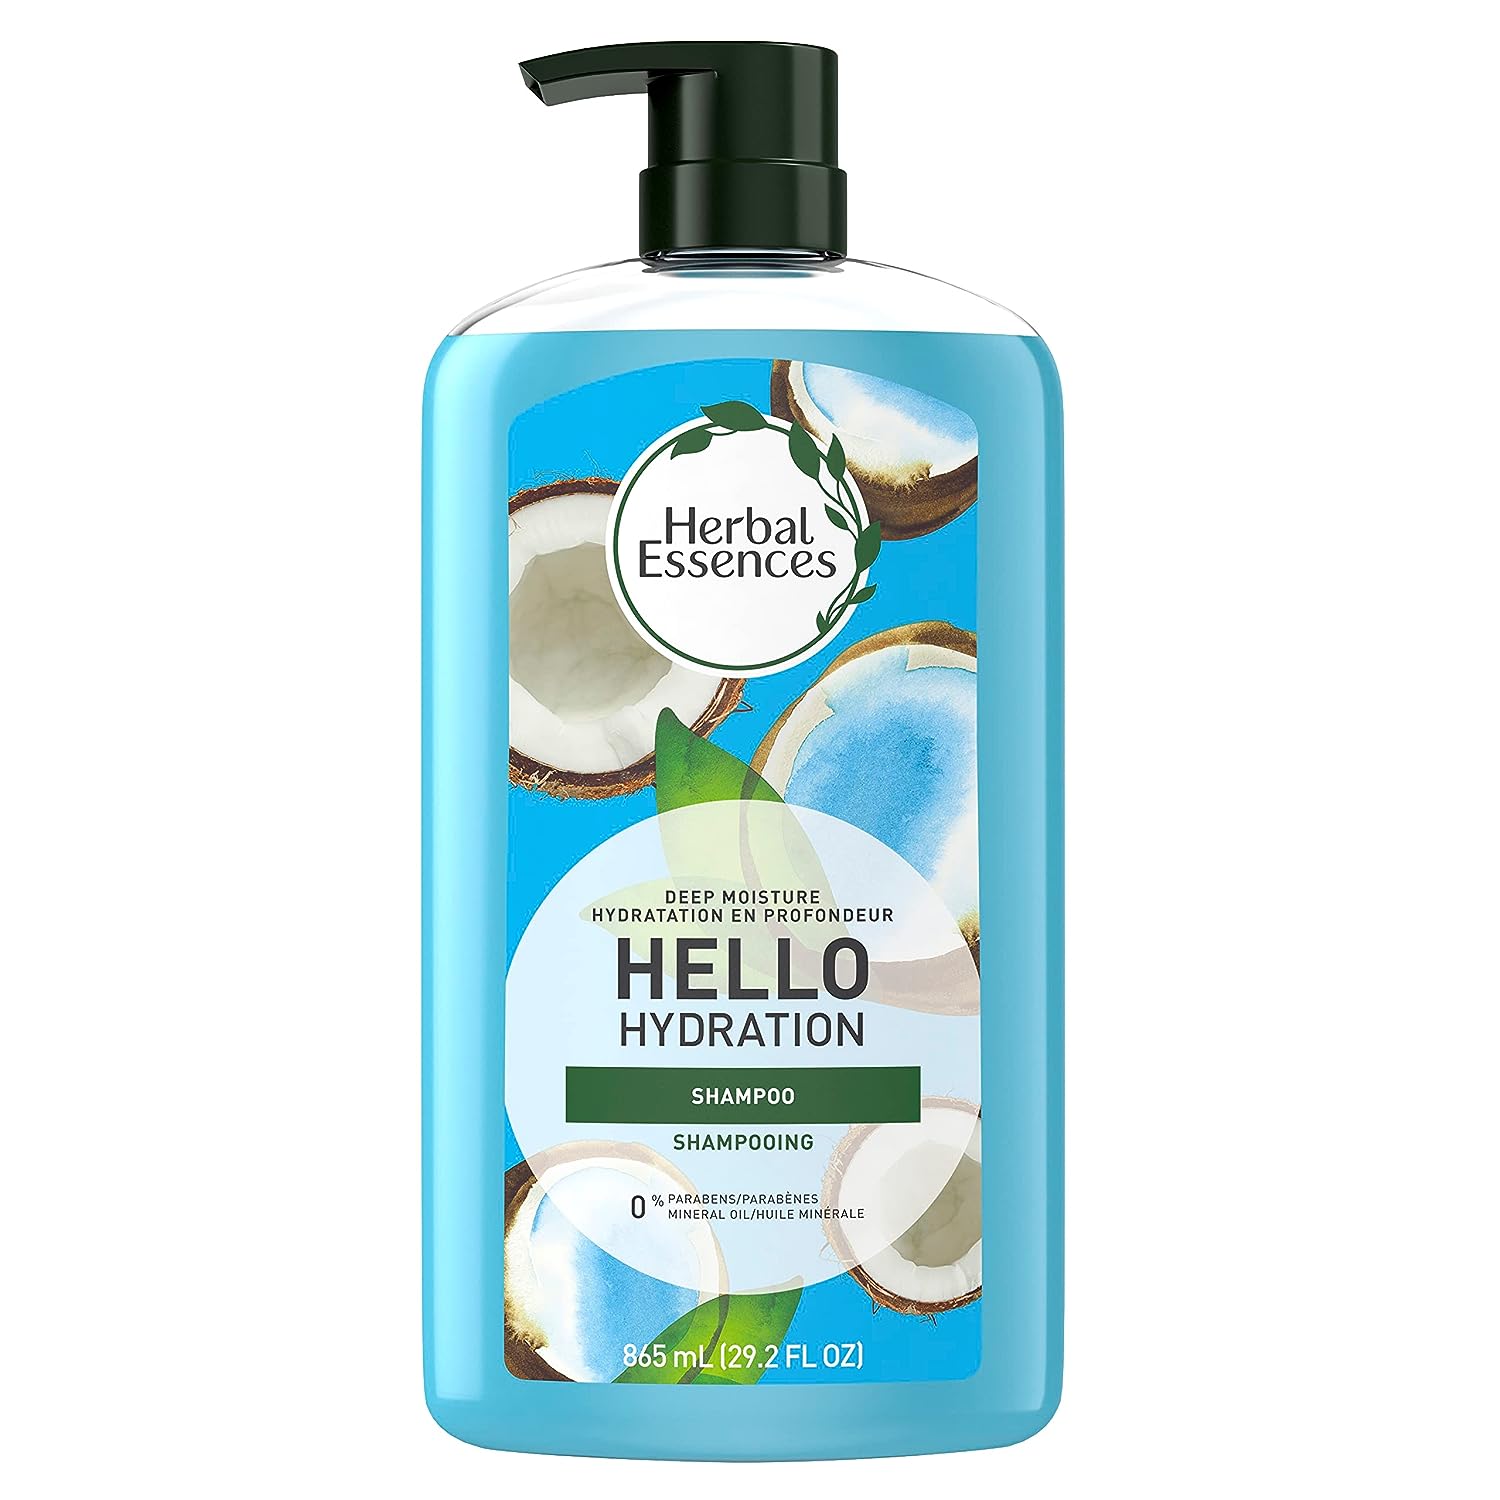 Herbal Essences Hello hydration shampoo shampooing for [...]